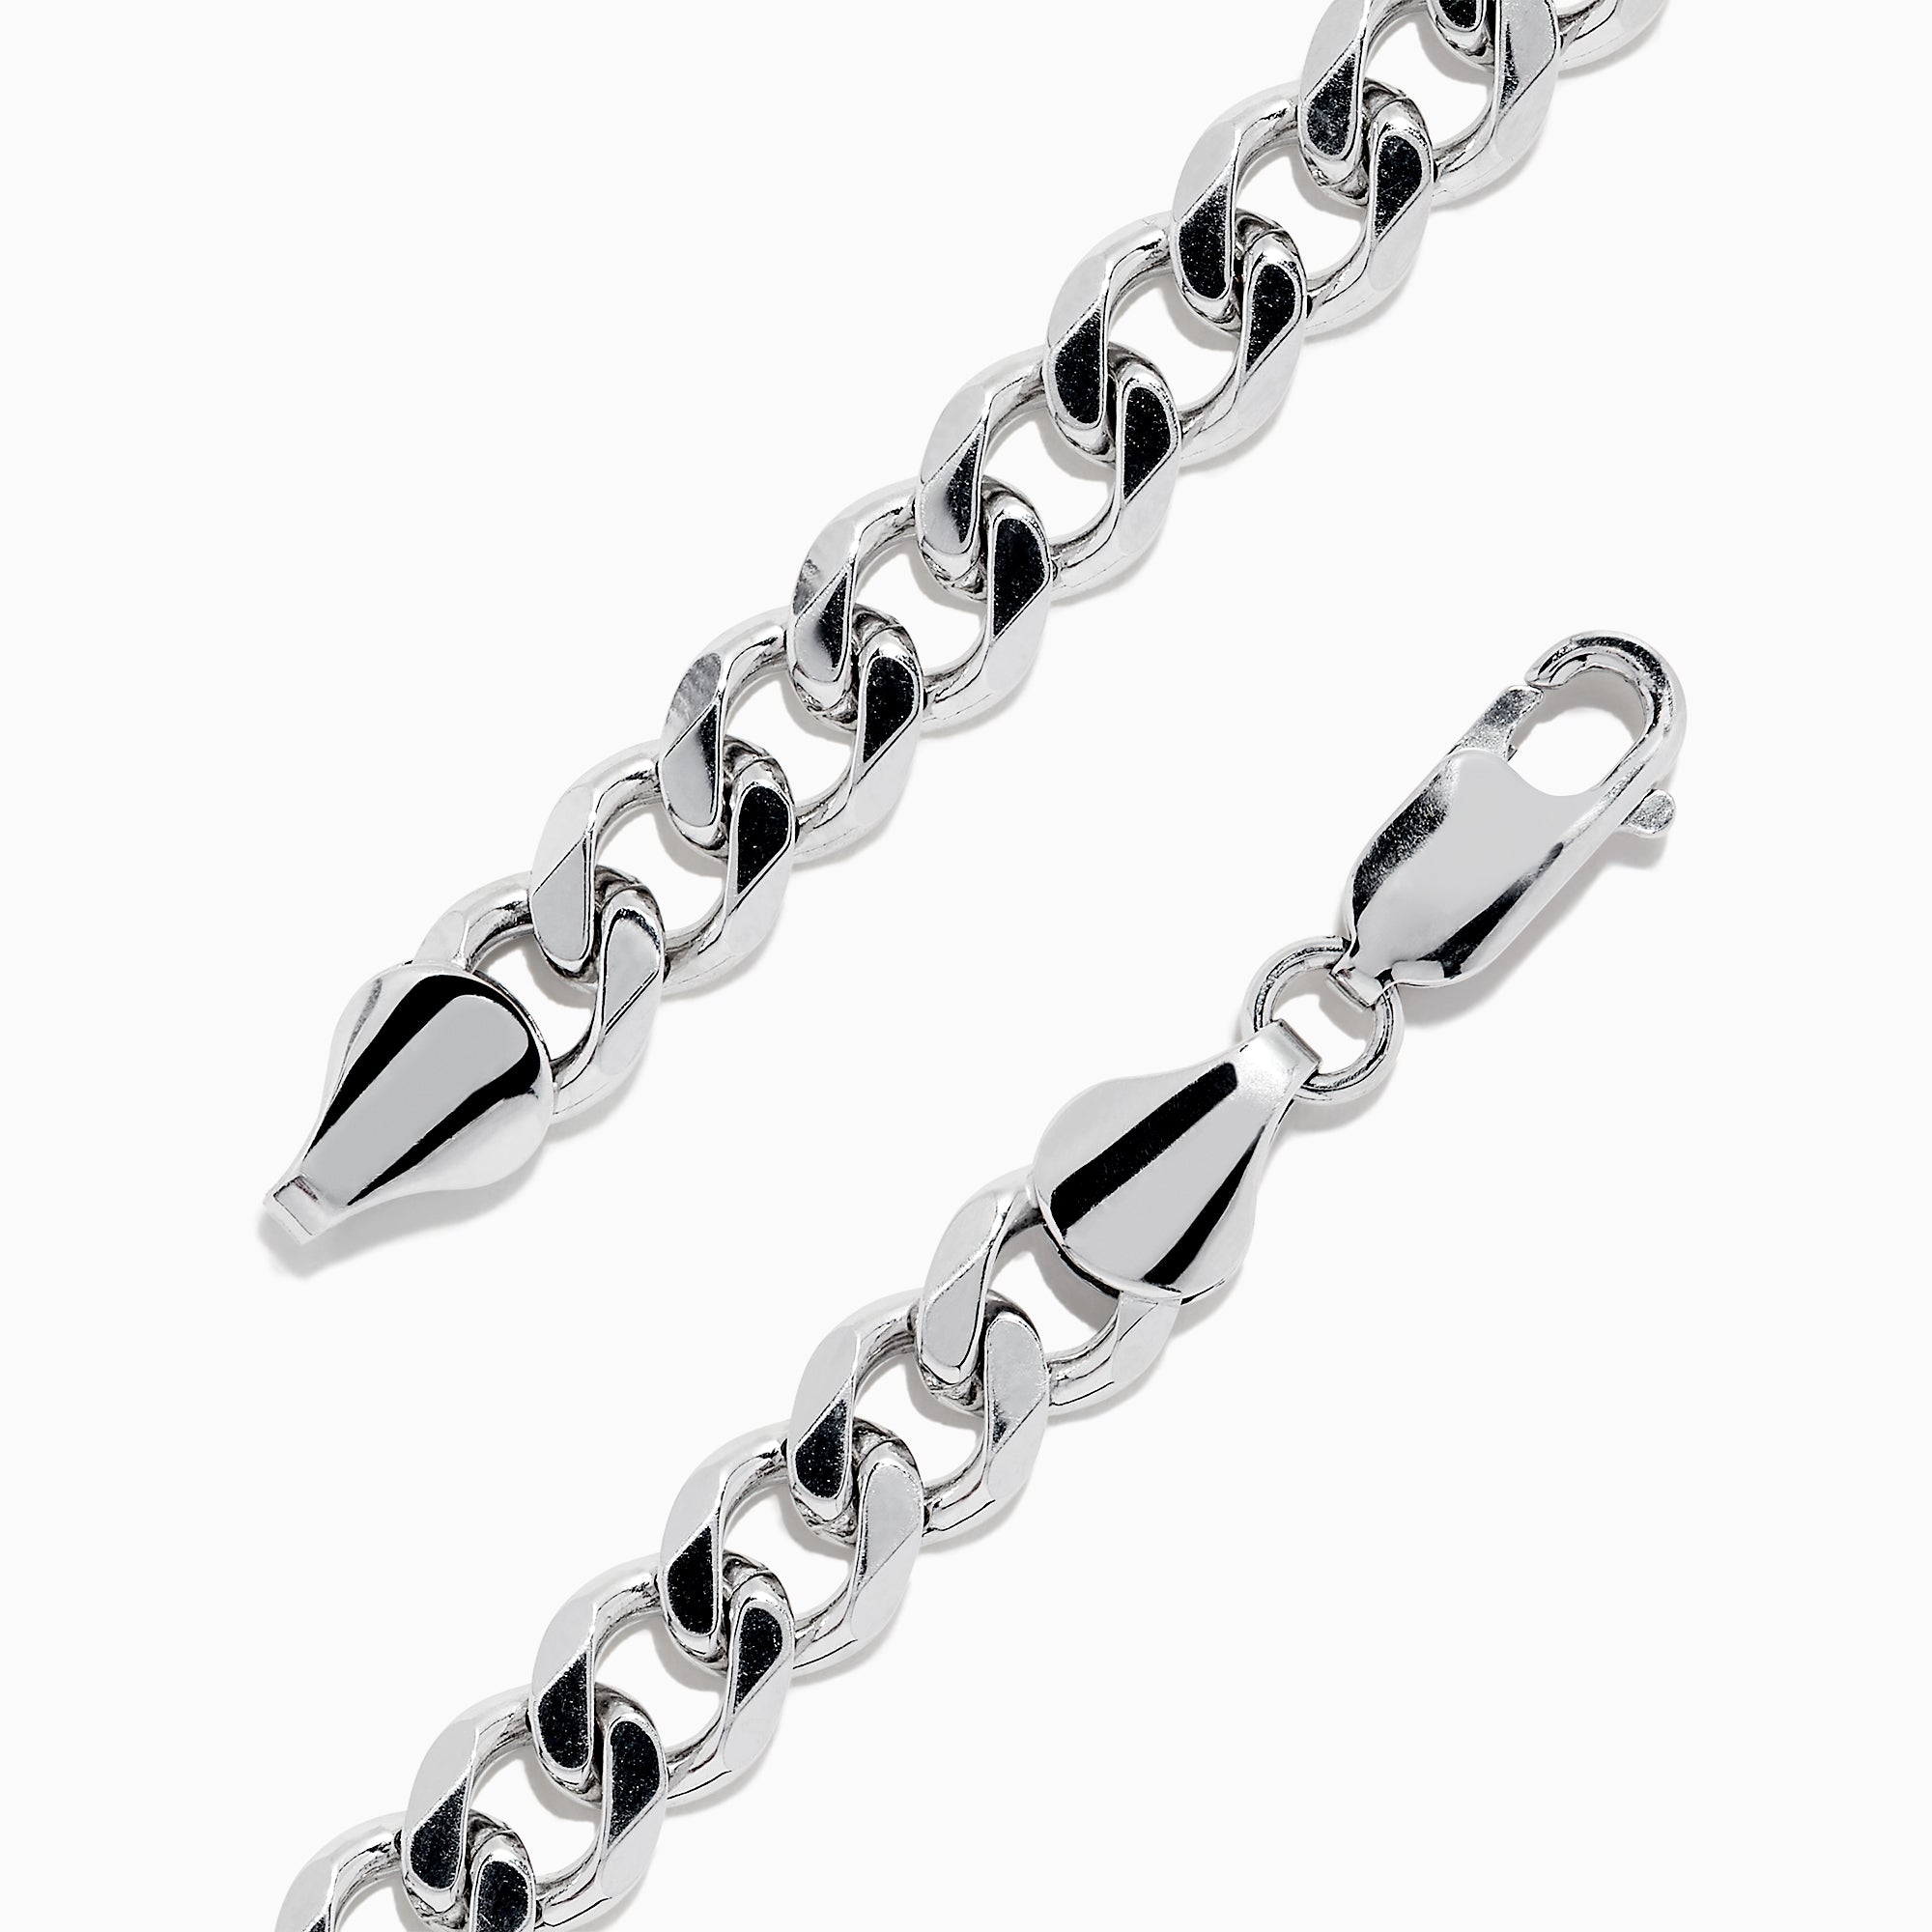 Effy Men's 925 Sterling Silver Curb Chain Bracelet